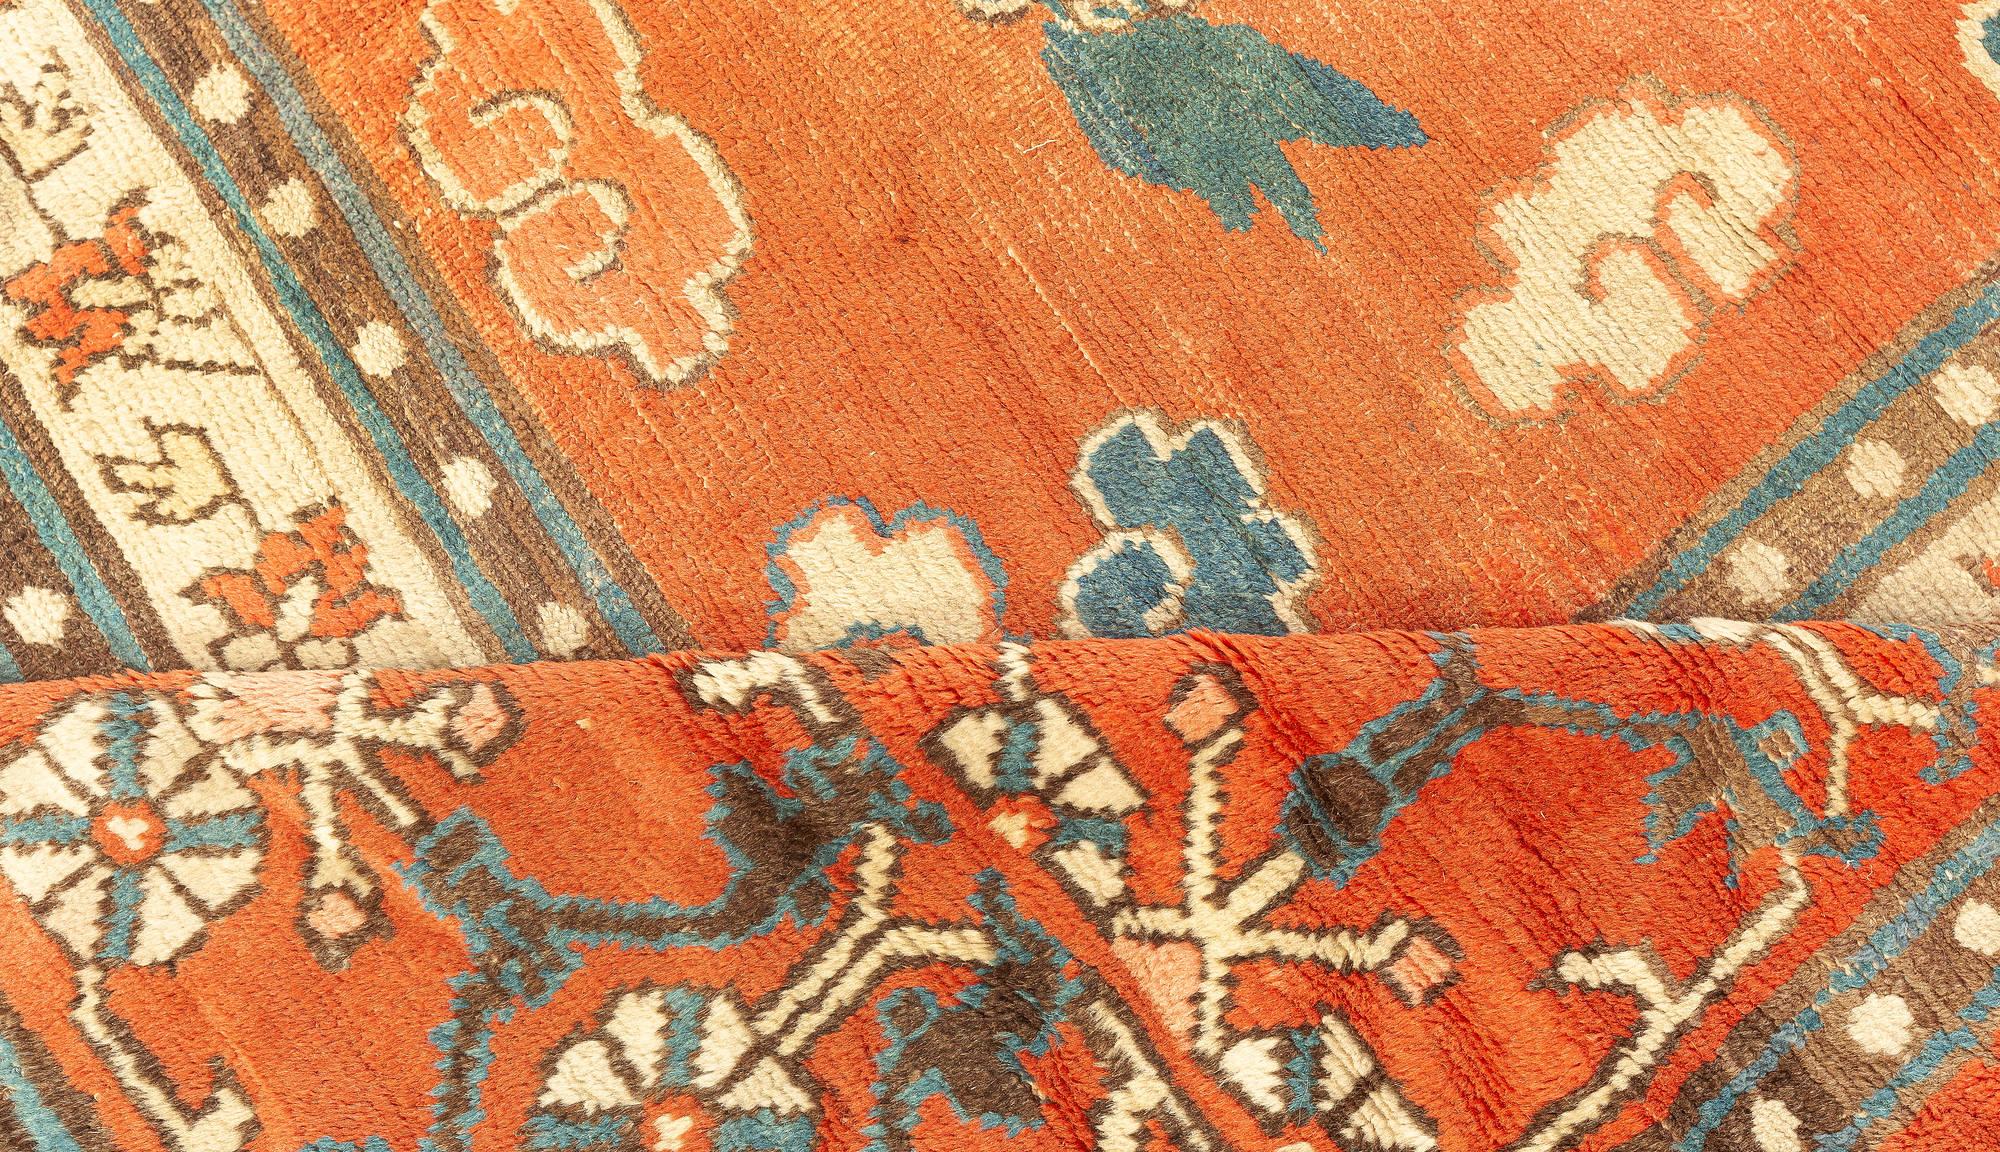 Early 20th Century Samarkand Dragon Carpet
Size: 11'3